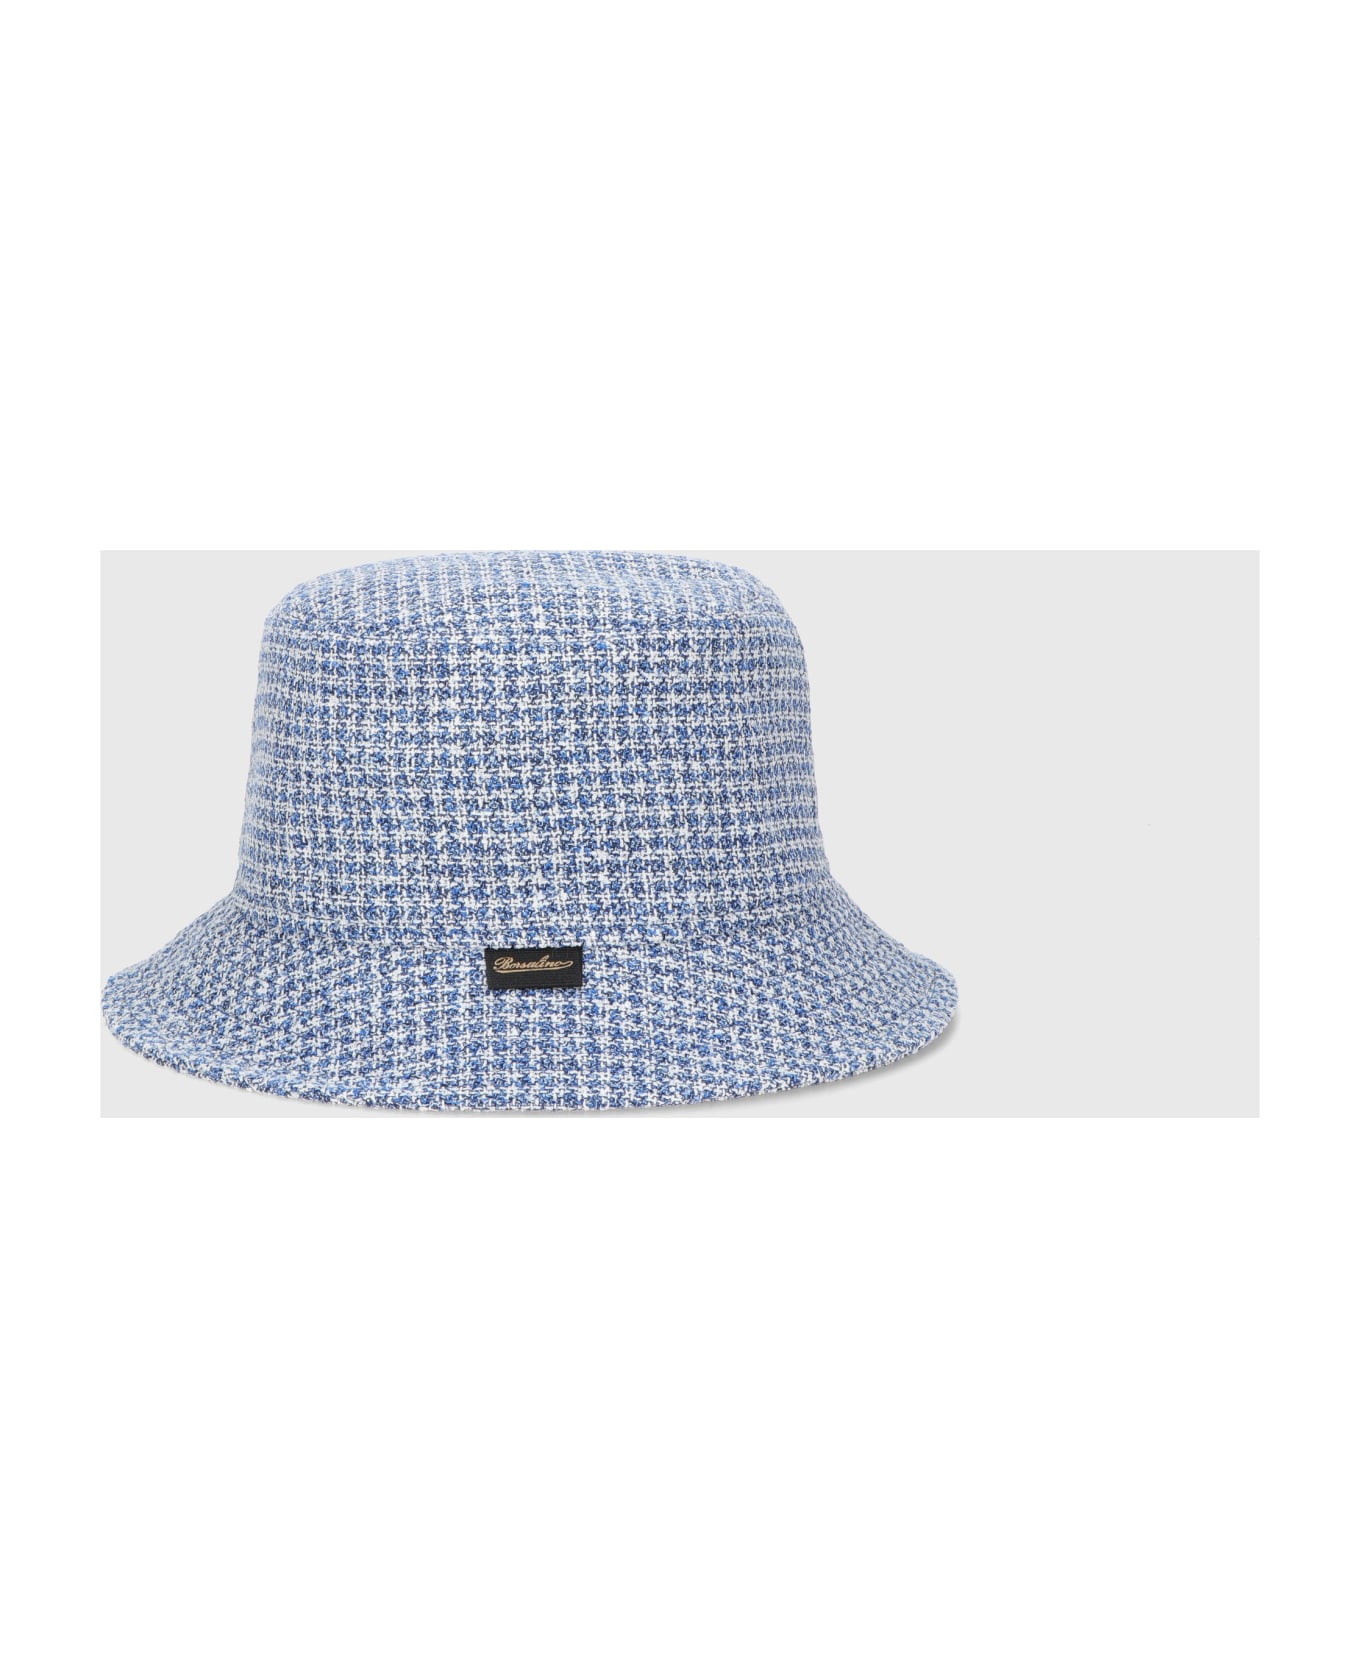 Borsalino Mistero Bucket - HOUNDSTOOTH BLUE/WHITE 帽子